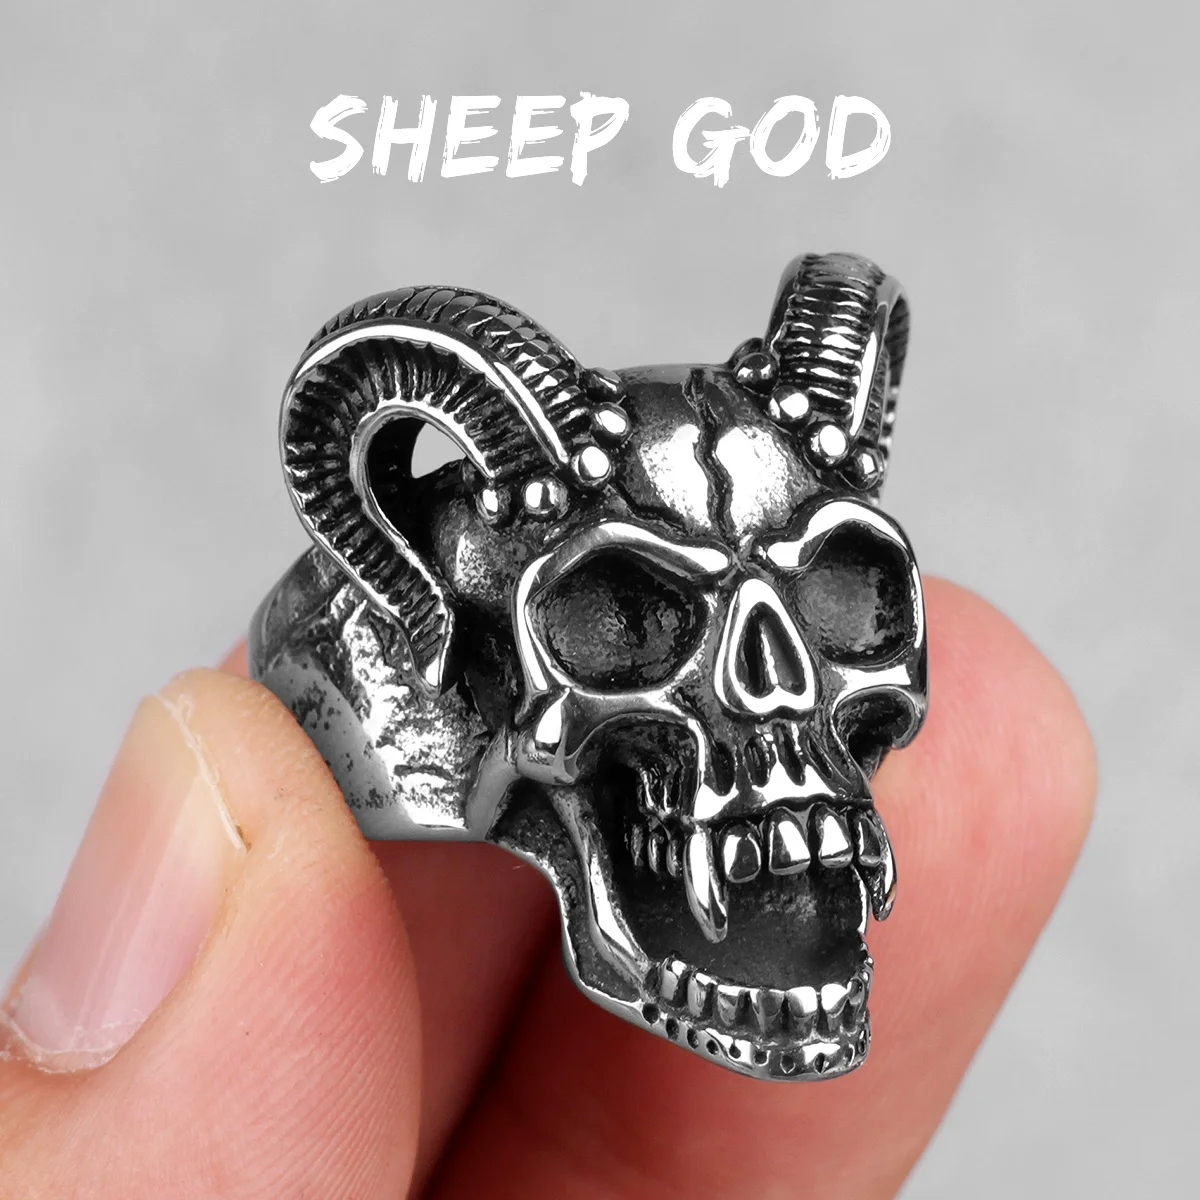 Sheep God